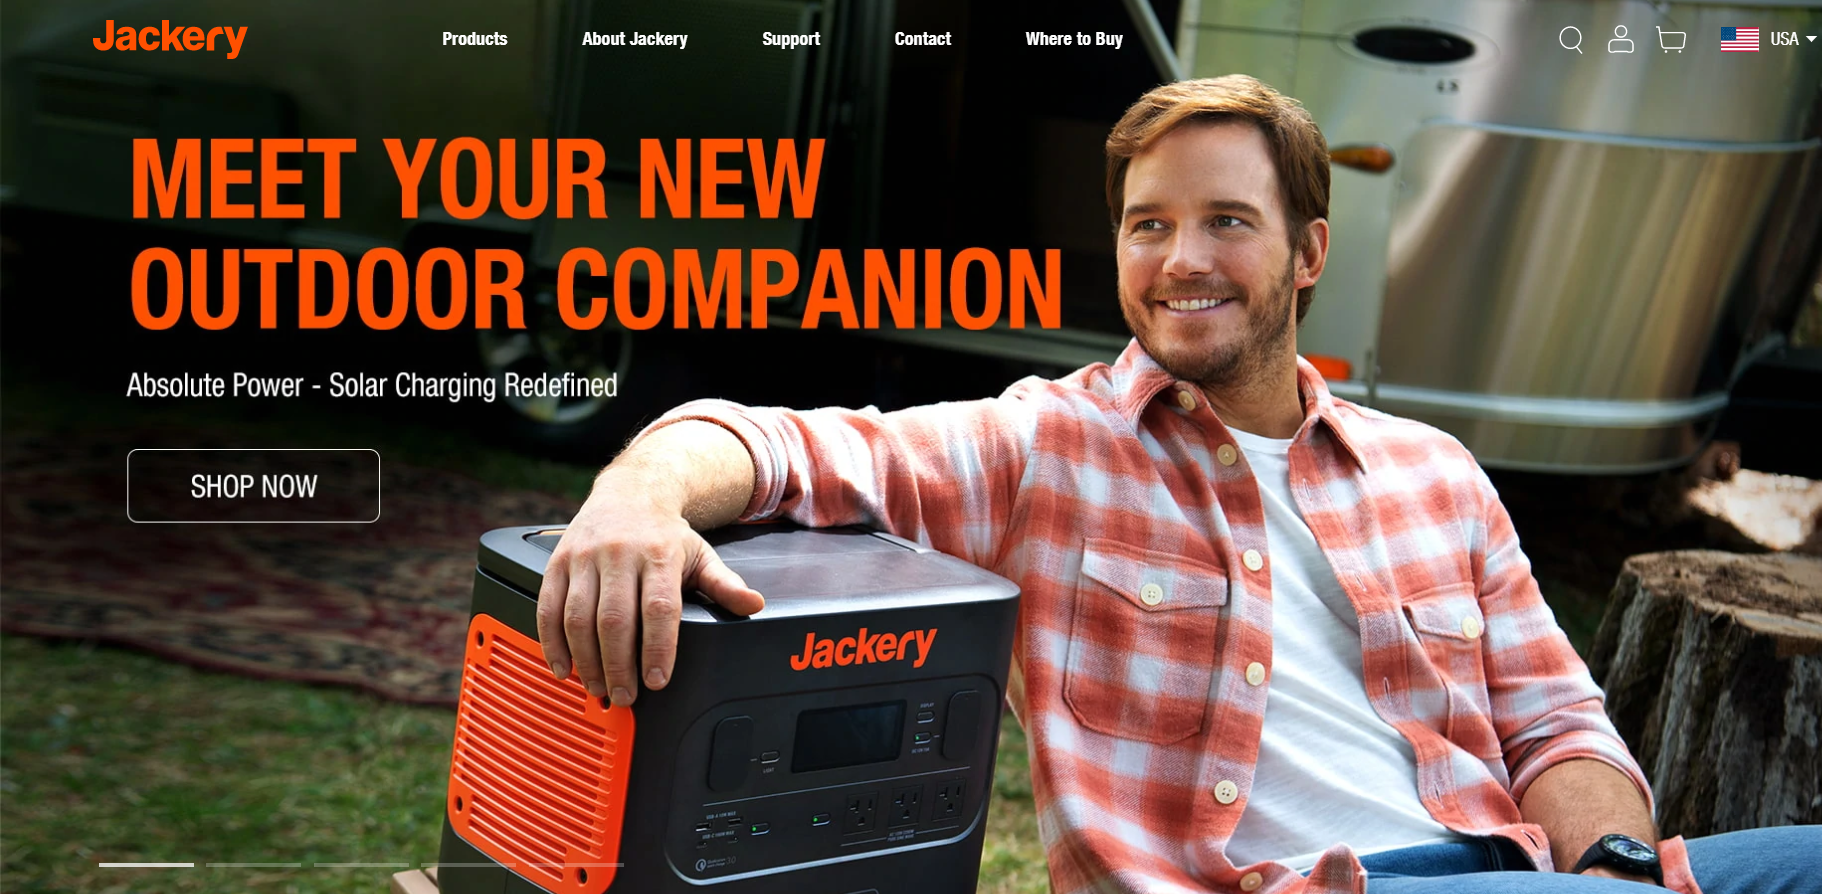 Jackery-homepage-outdoor-powerhouse-companion